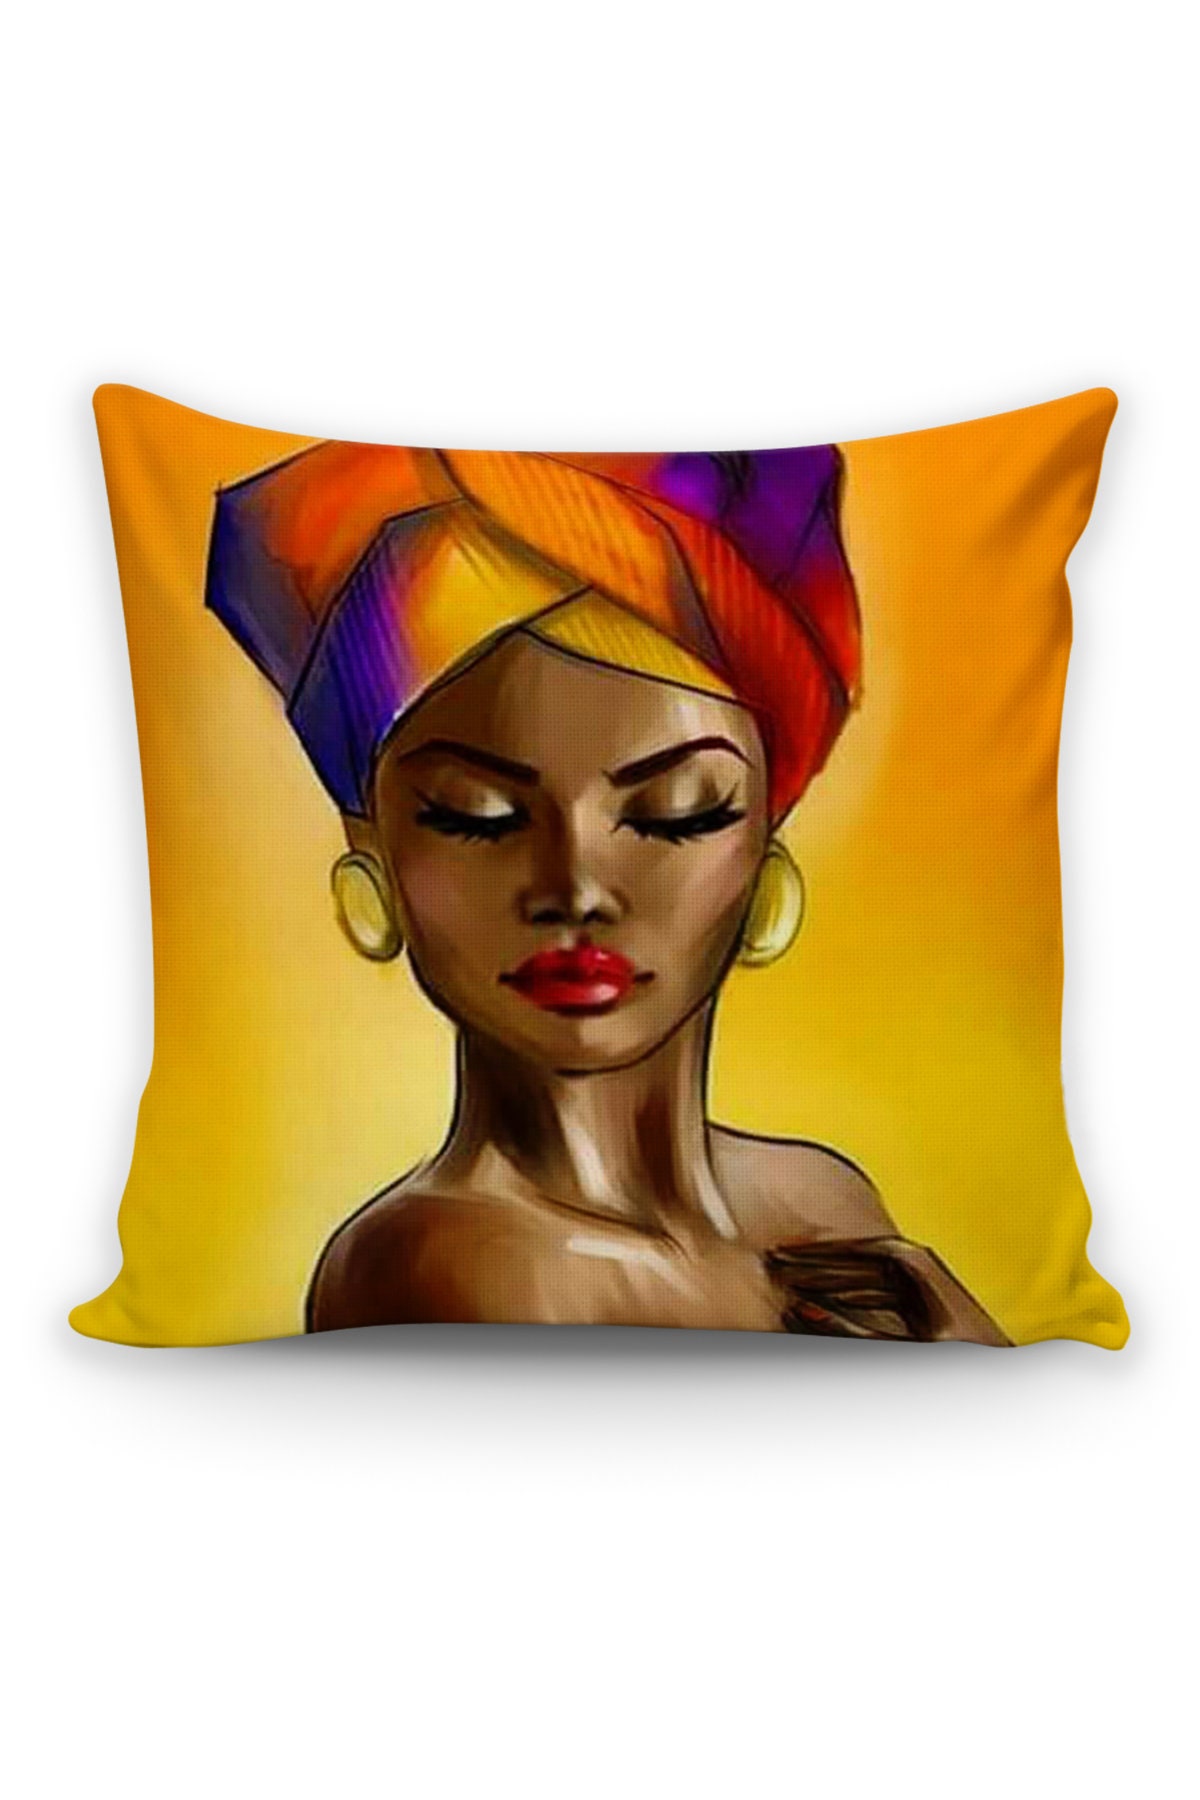 African Woman Pillow Case, African Art Cushion Cover, Black Woman ...